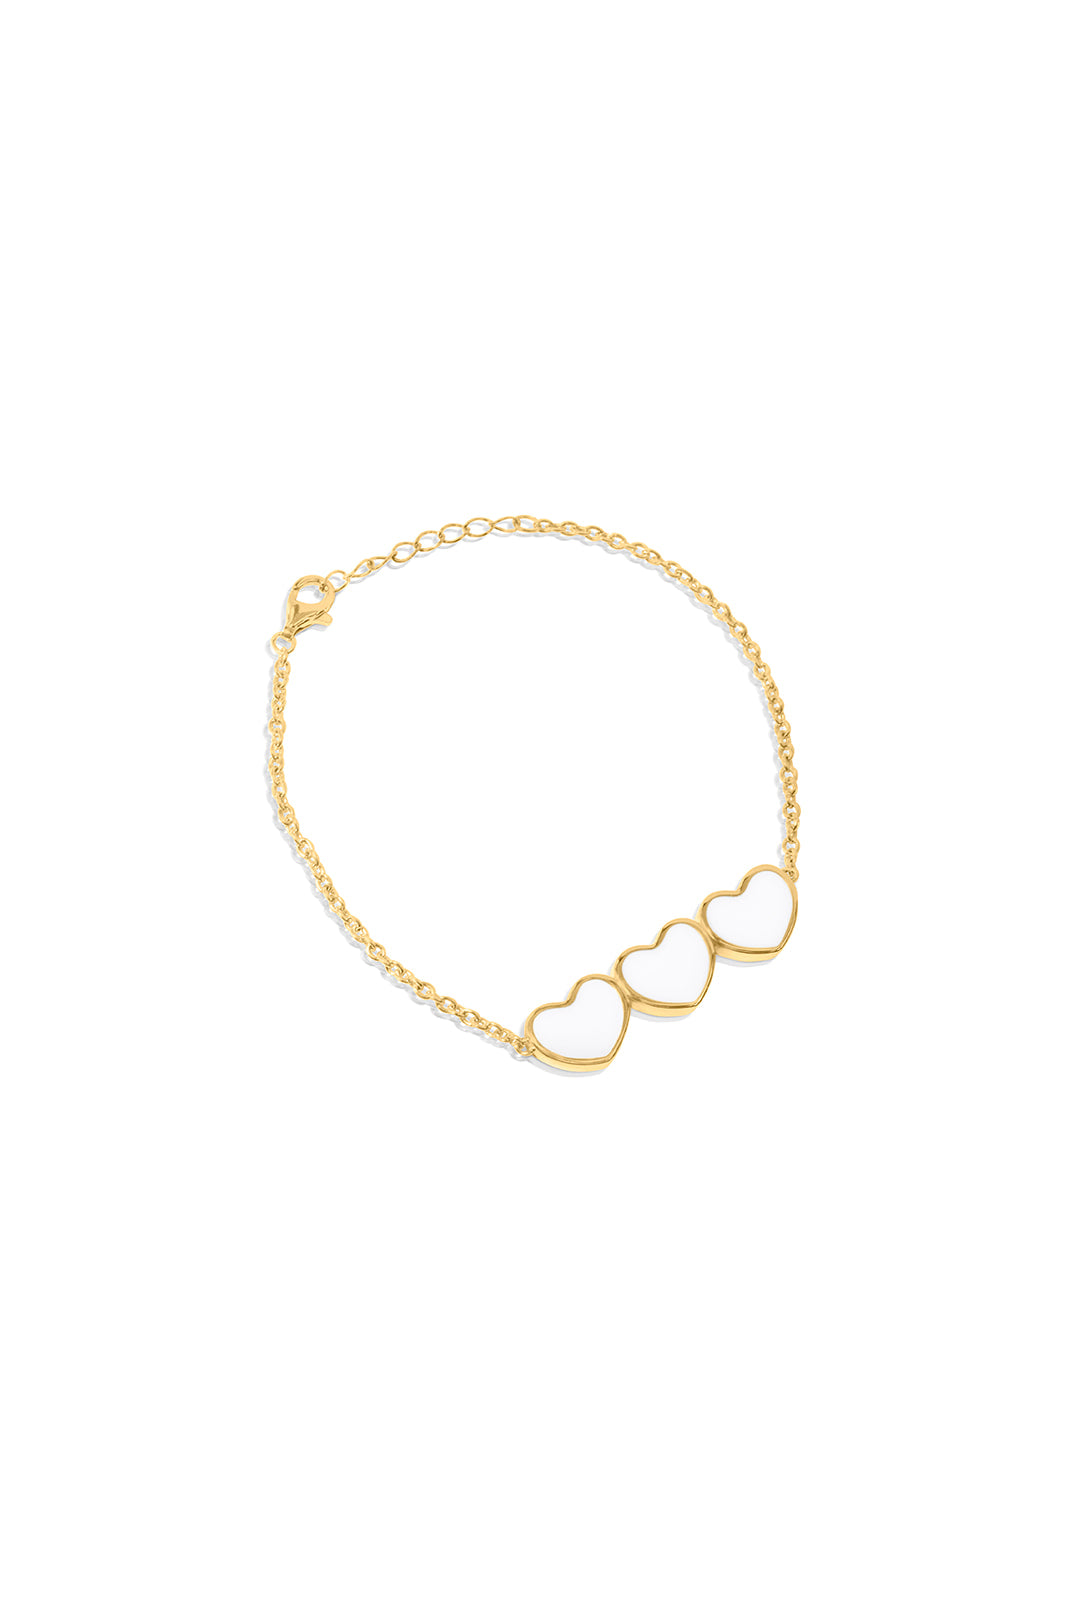 Breastmilk Heart Bracelet - 9ct Gold